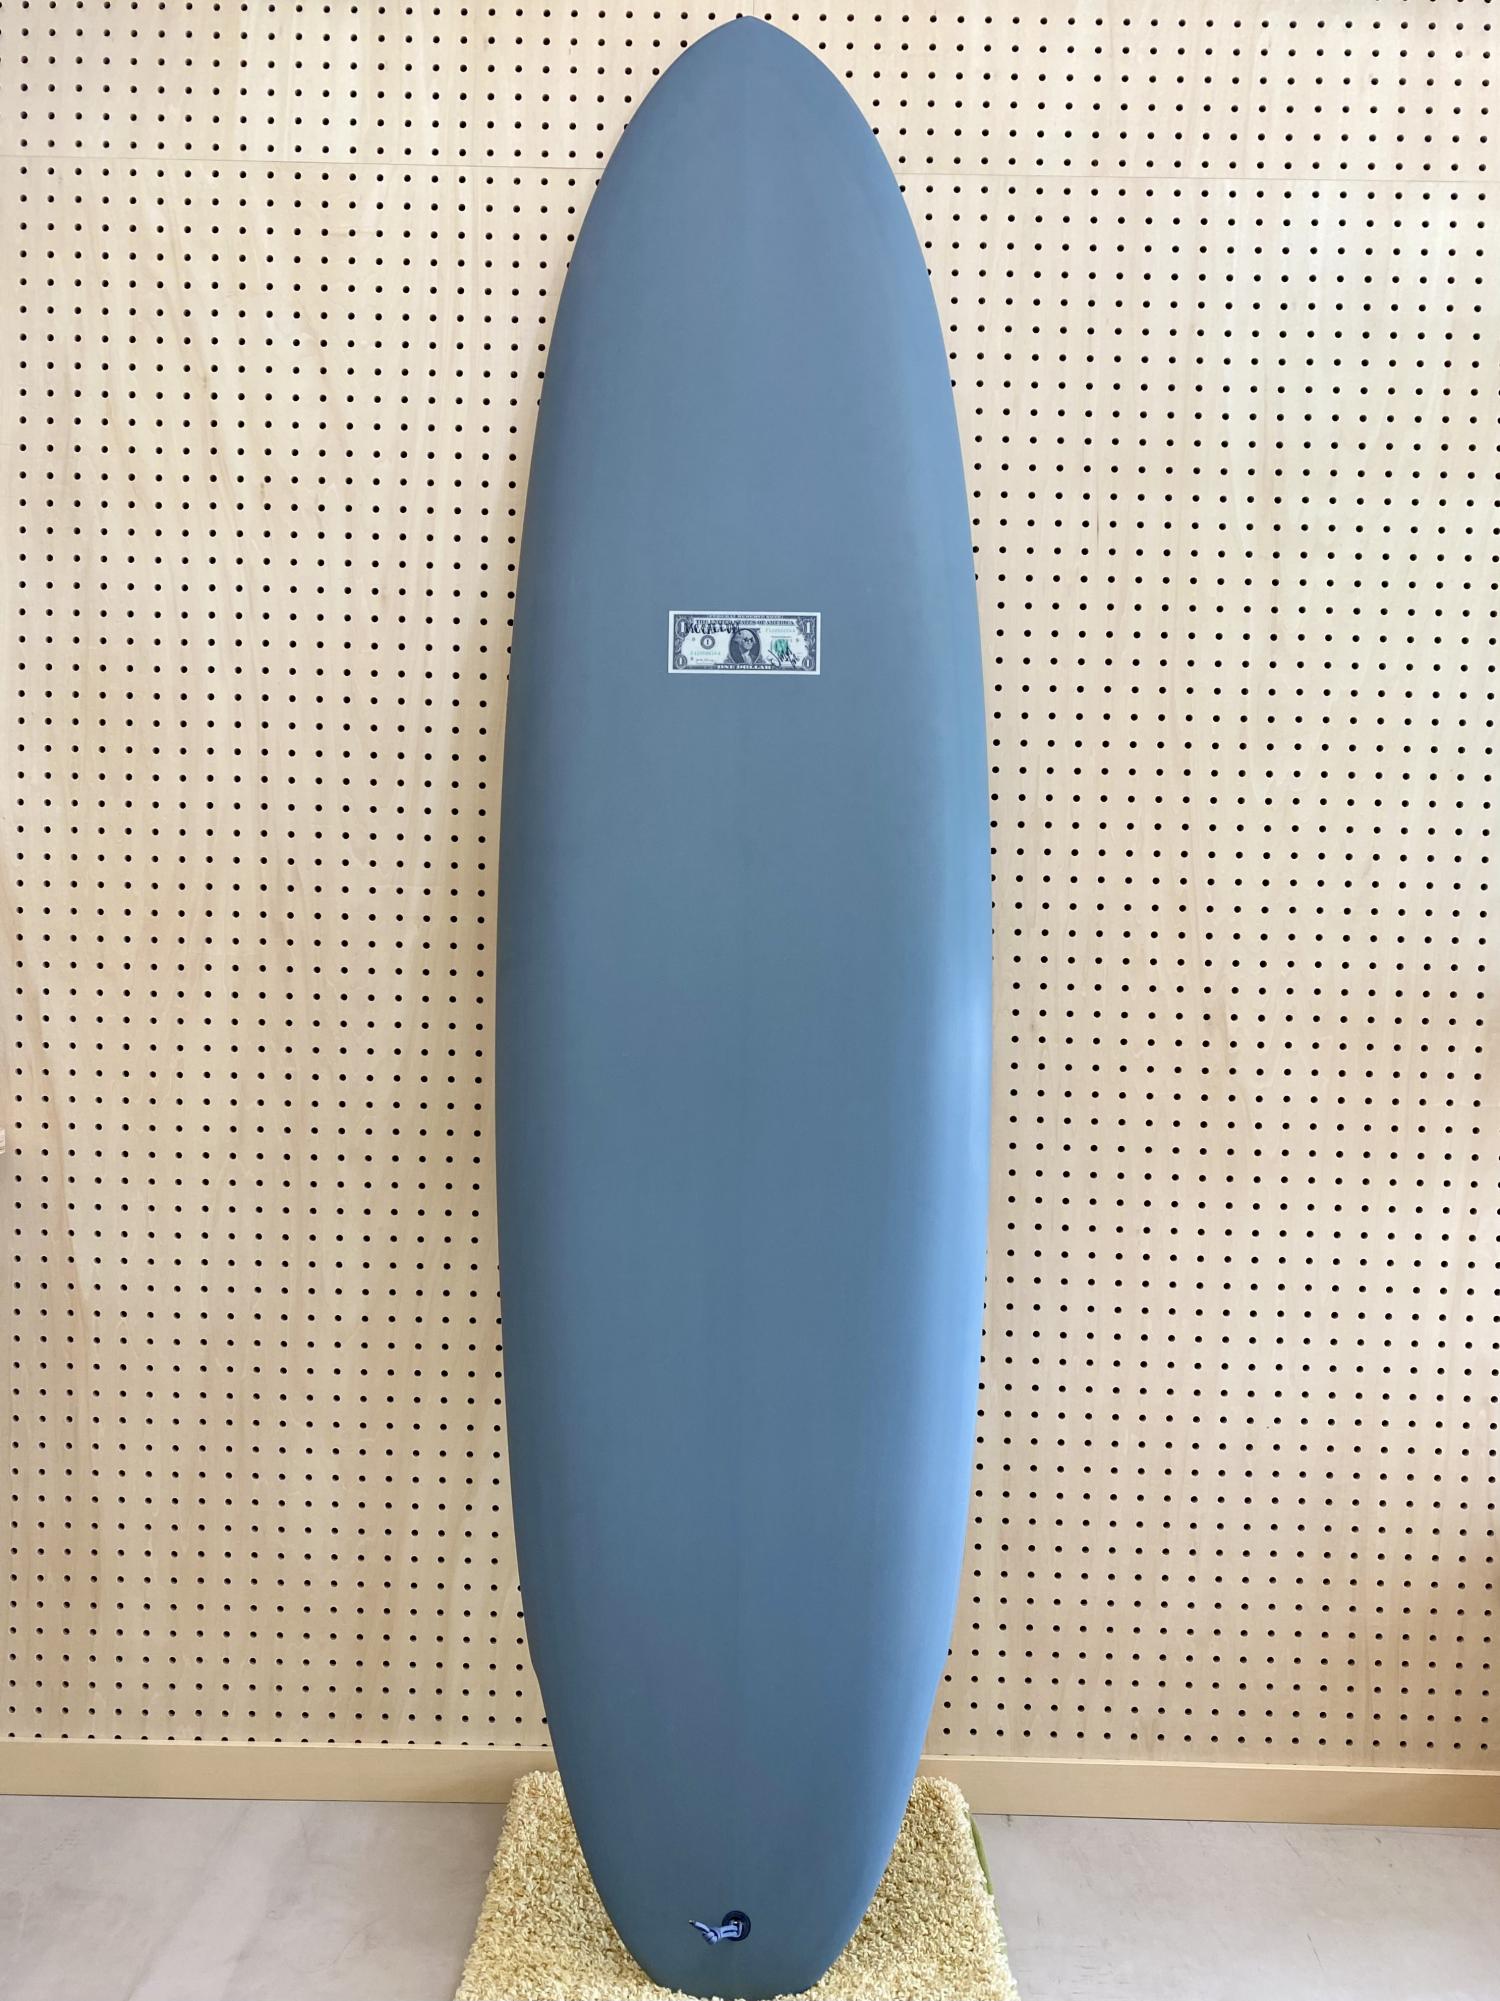 MCCallum Surfboards | chicanetape.com